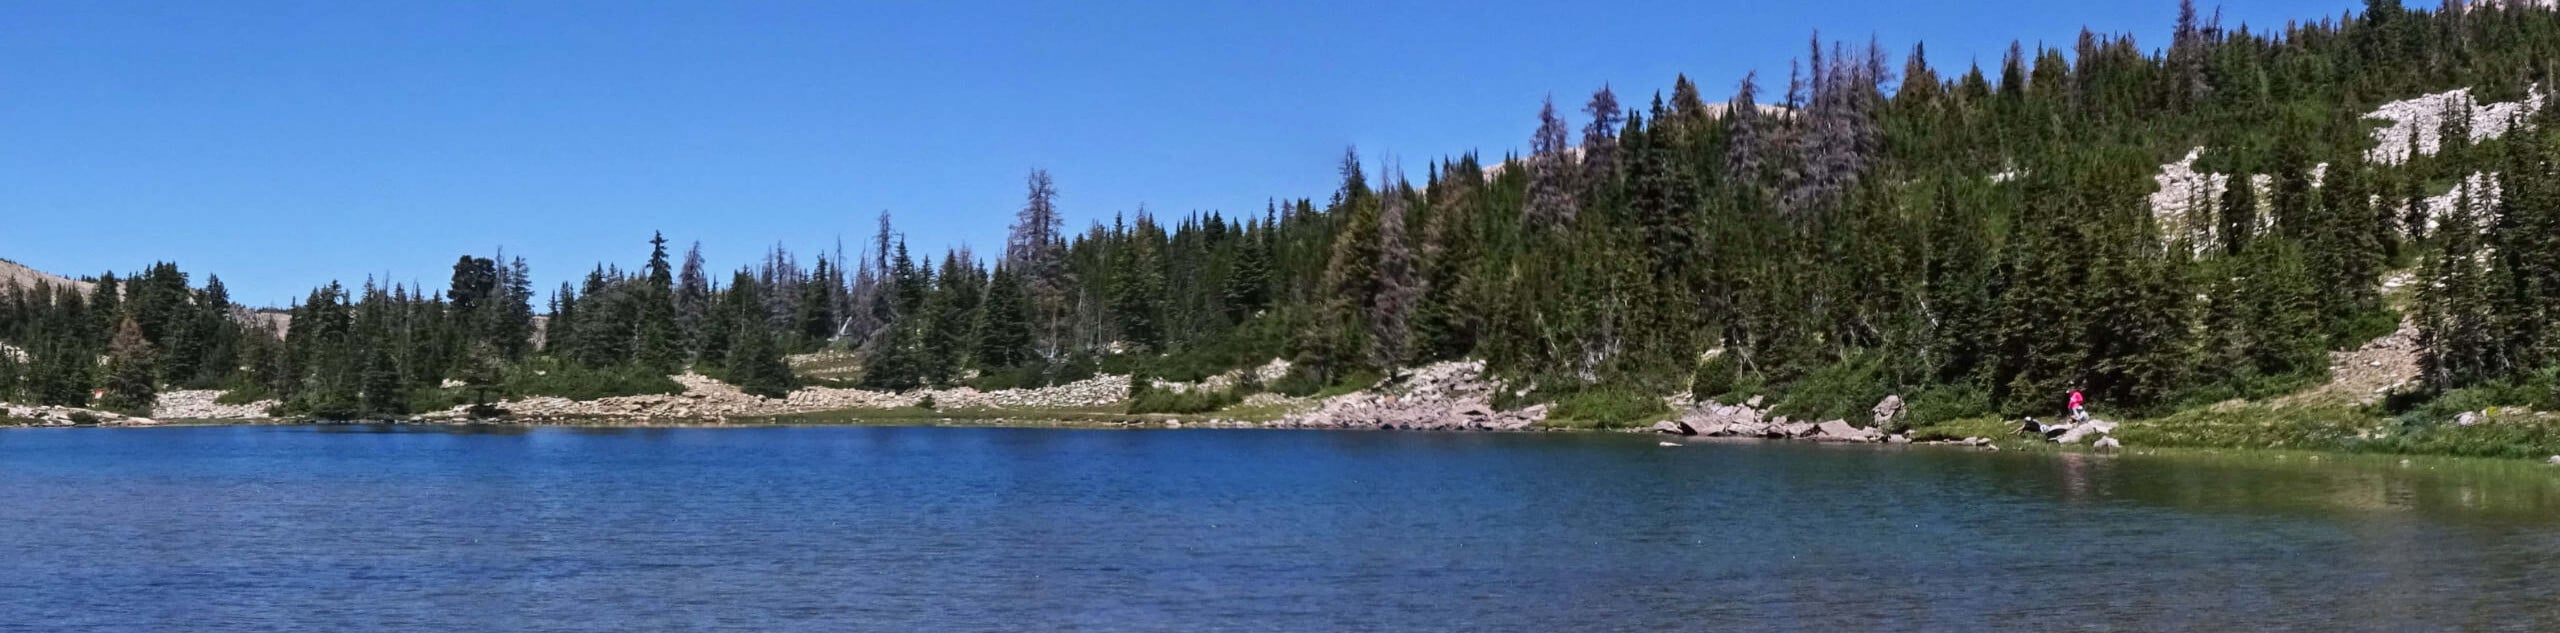 The Ruth Lake, Lofty Lake, and Scout Lake Trail